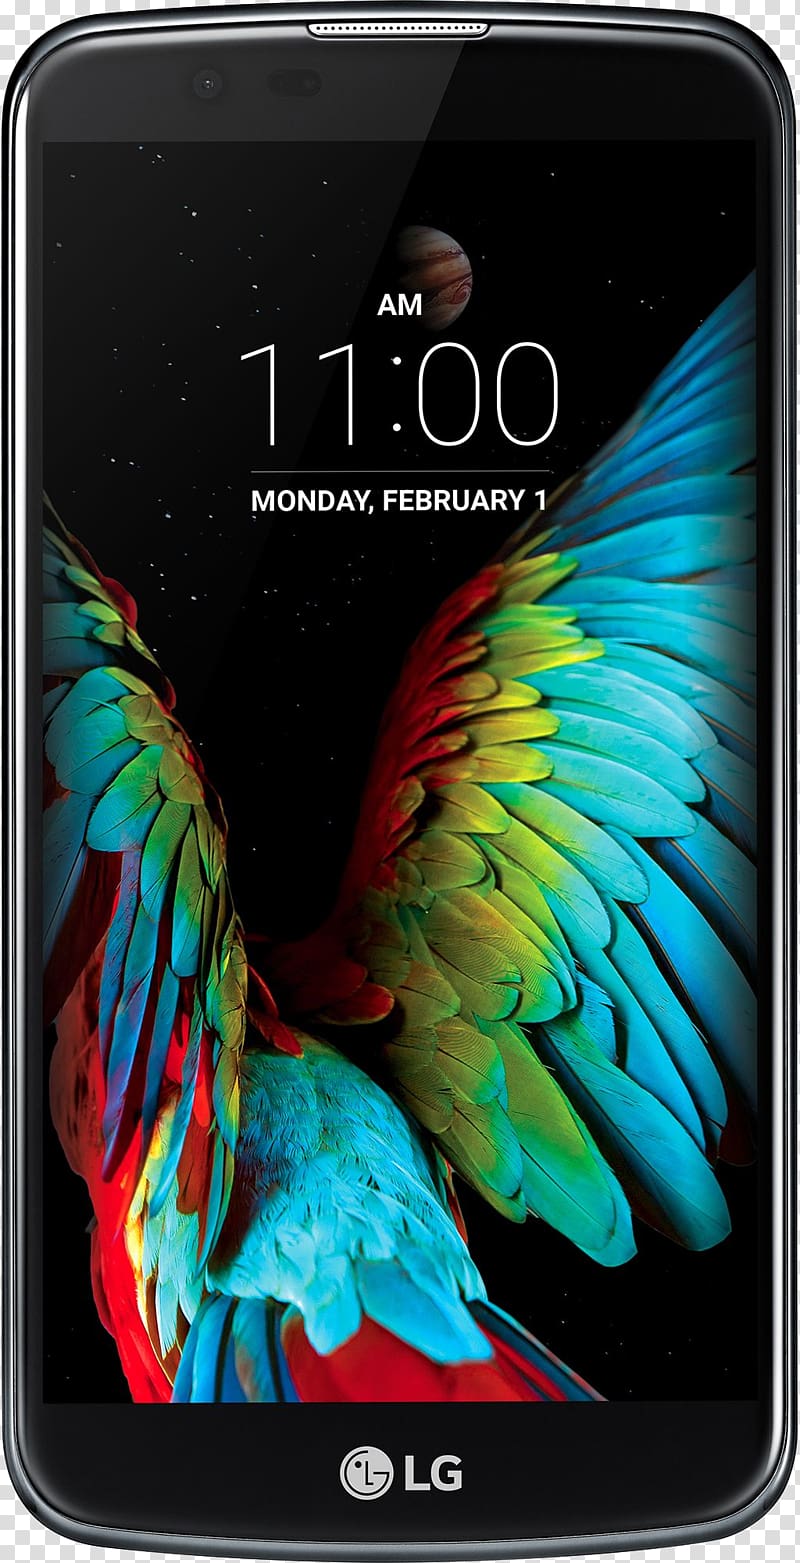 LG K10 LG Electronics Dual SIM Smartphone, LG K10 transparent background PNG clipart